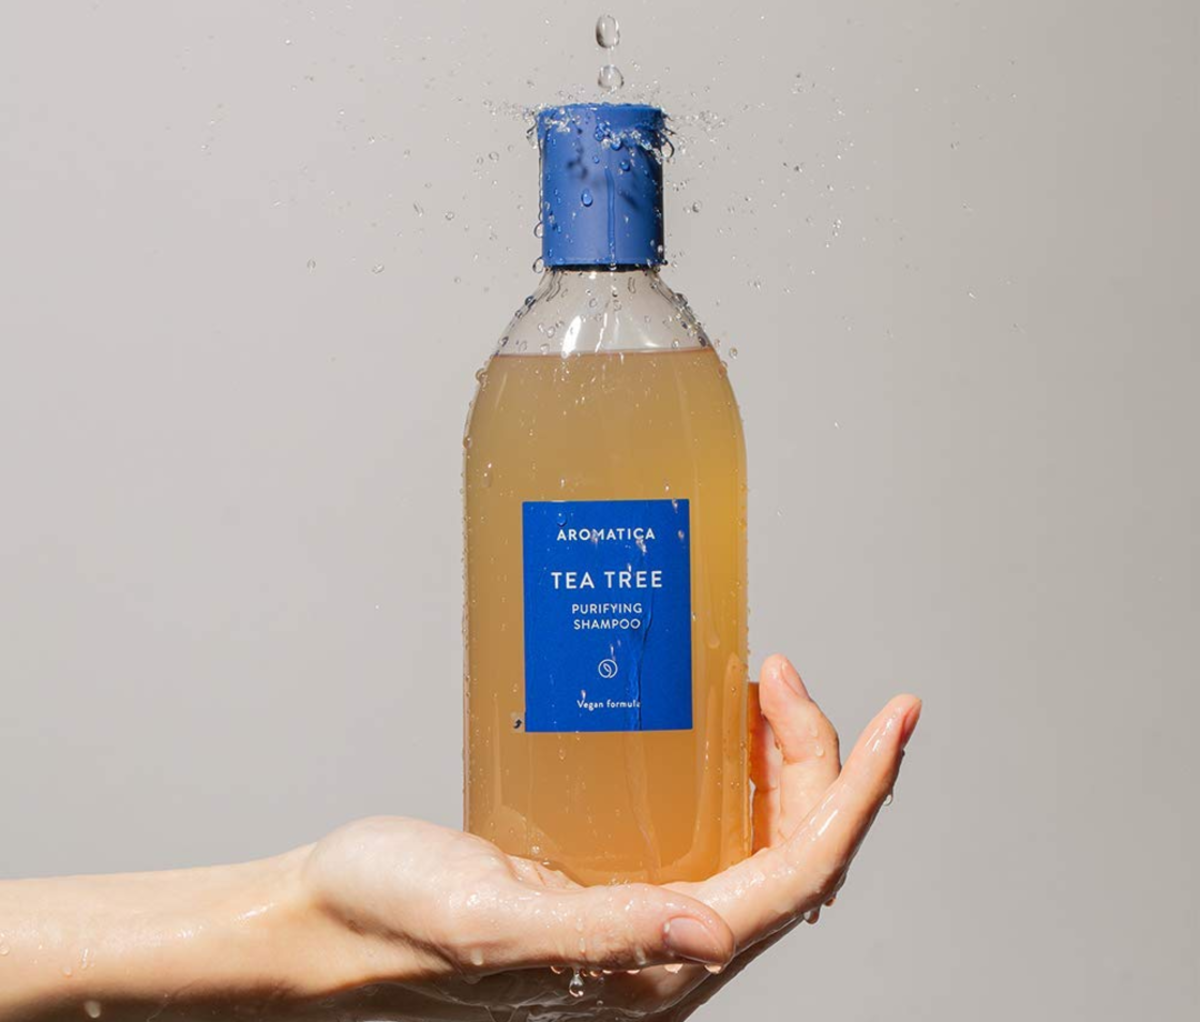 AROMATICA Tea Tree Purifying Shampoo with Salicylic Acid